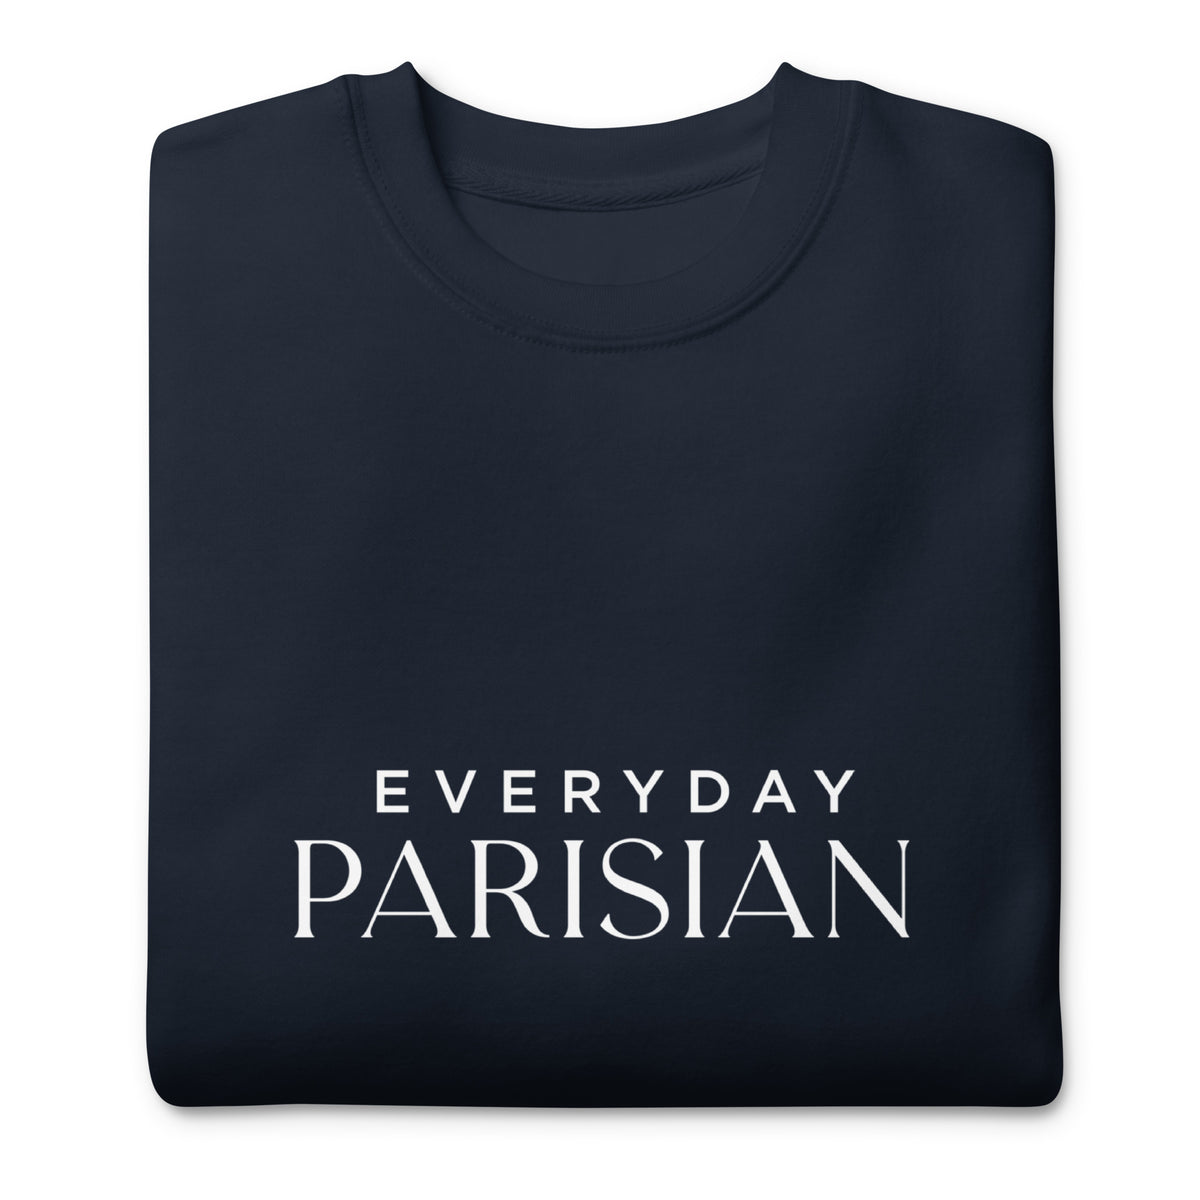 Everyday Parisian Navy Sweatshirt